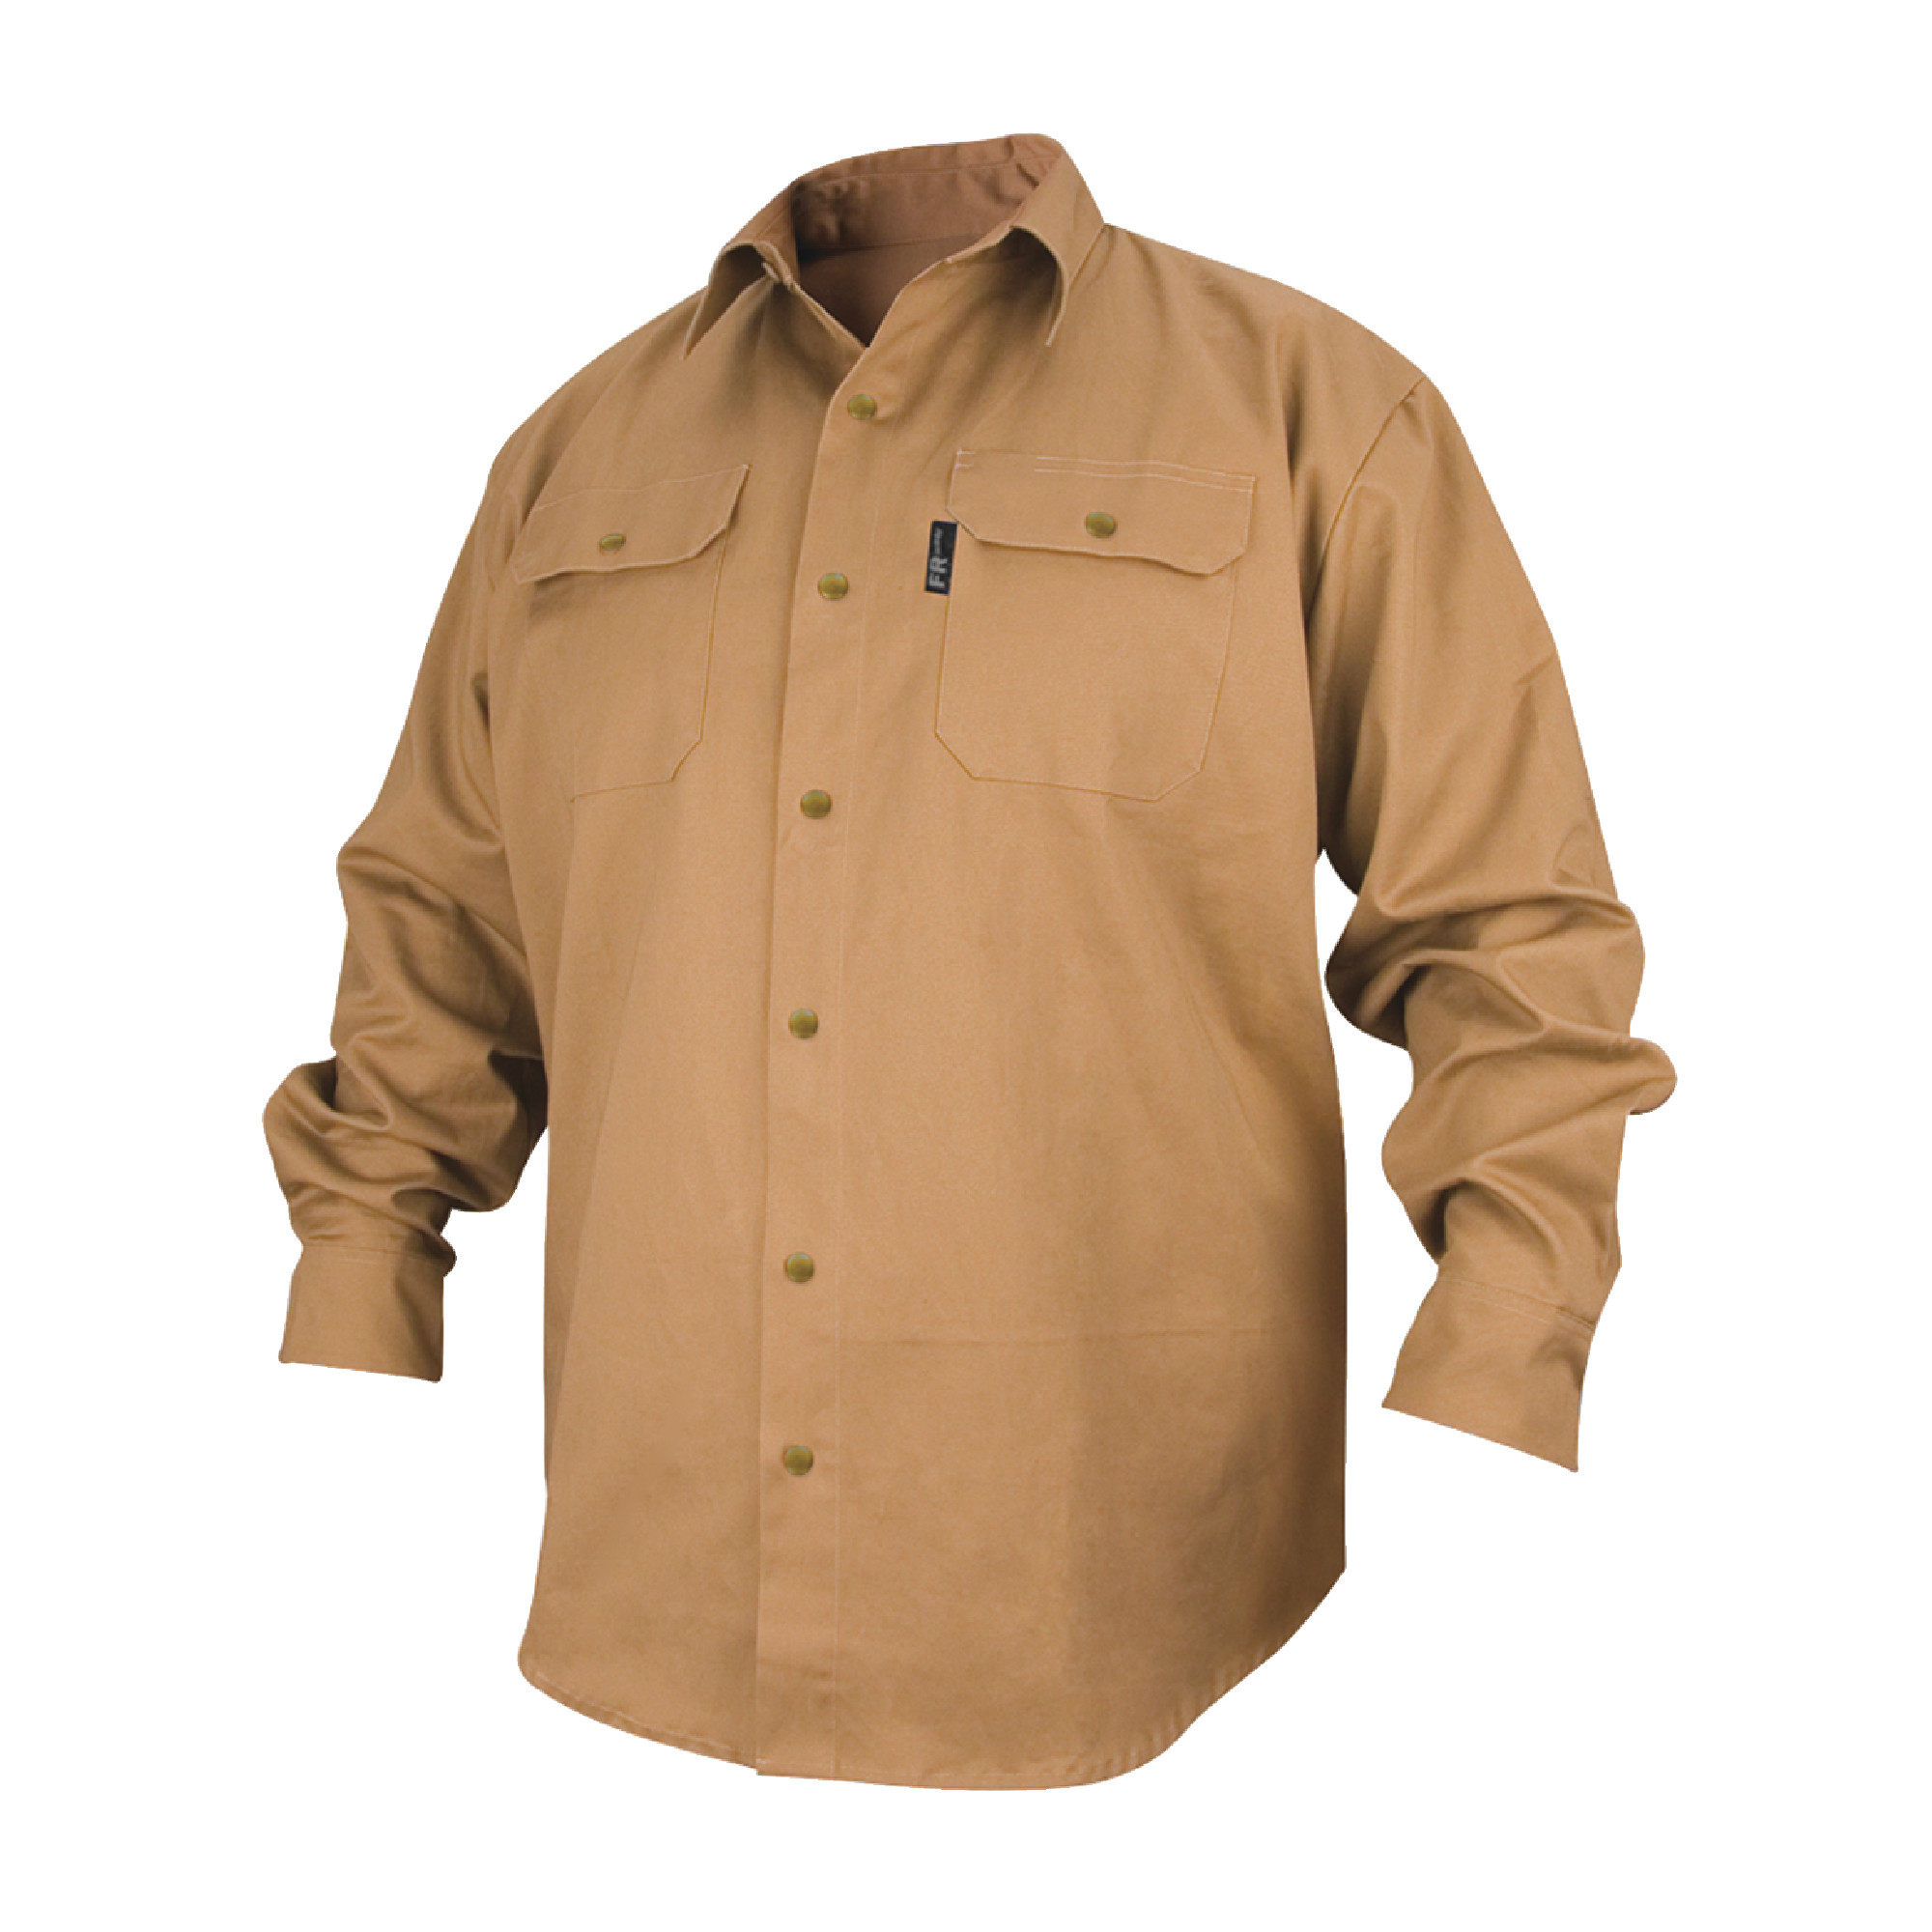 Black Stallion Khaki Fire Resistant Cotton Welding Shirt - Size XXXL